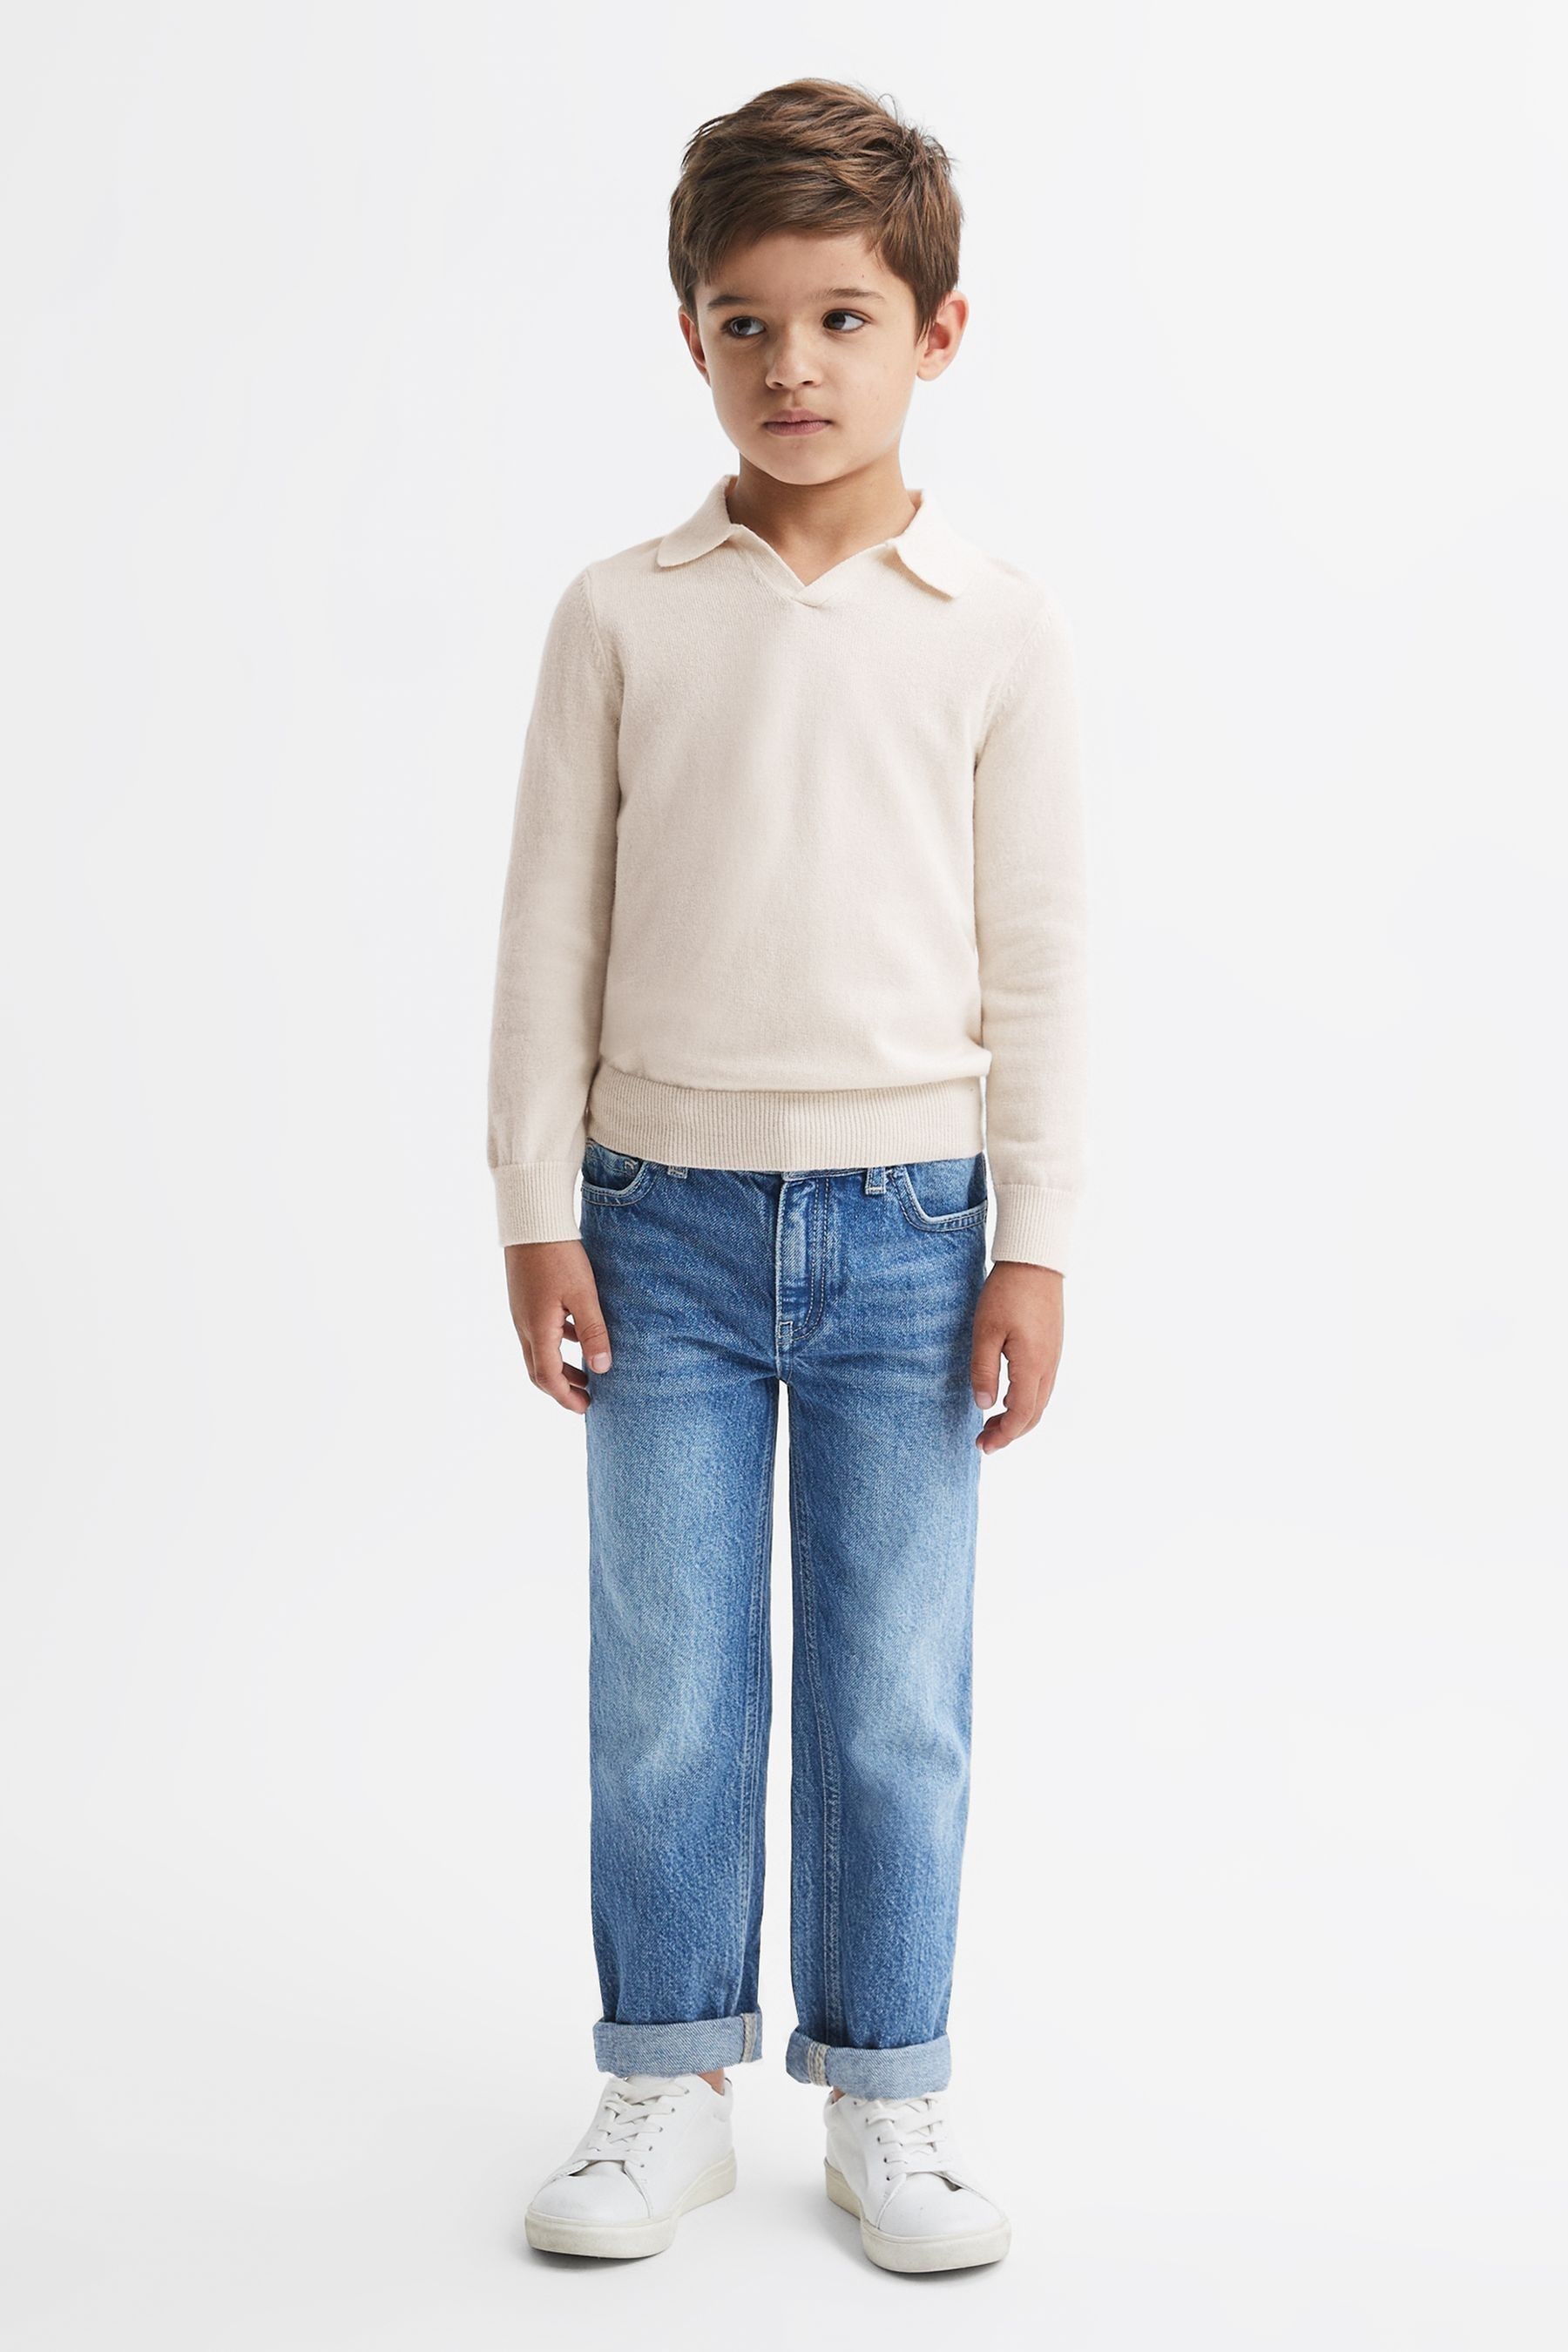 Reiss Swifts - Milk Junior Slim Fit Merino Wool Open Collar Top, Age 3-4 Years